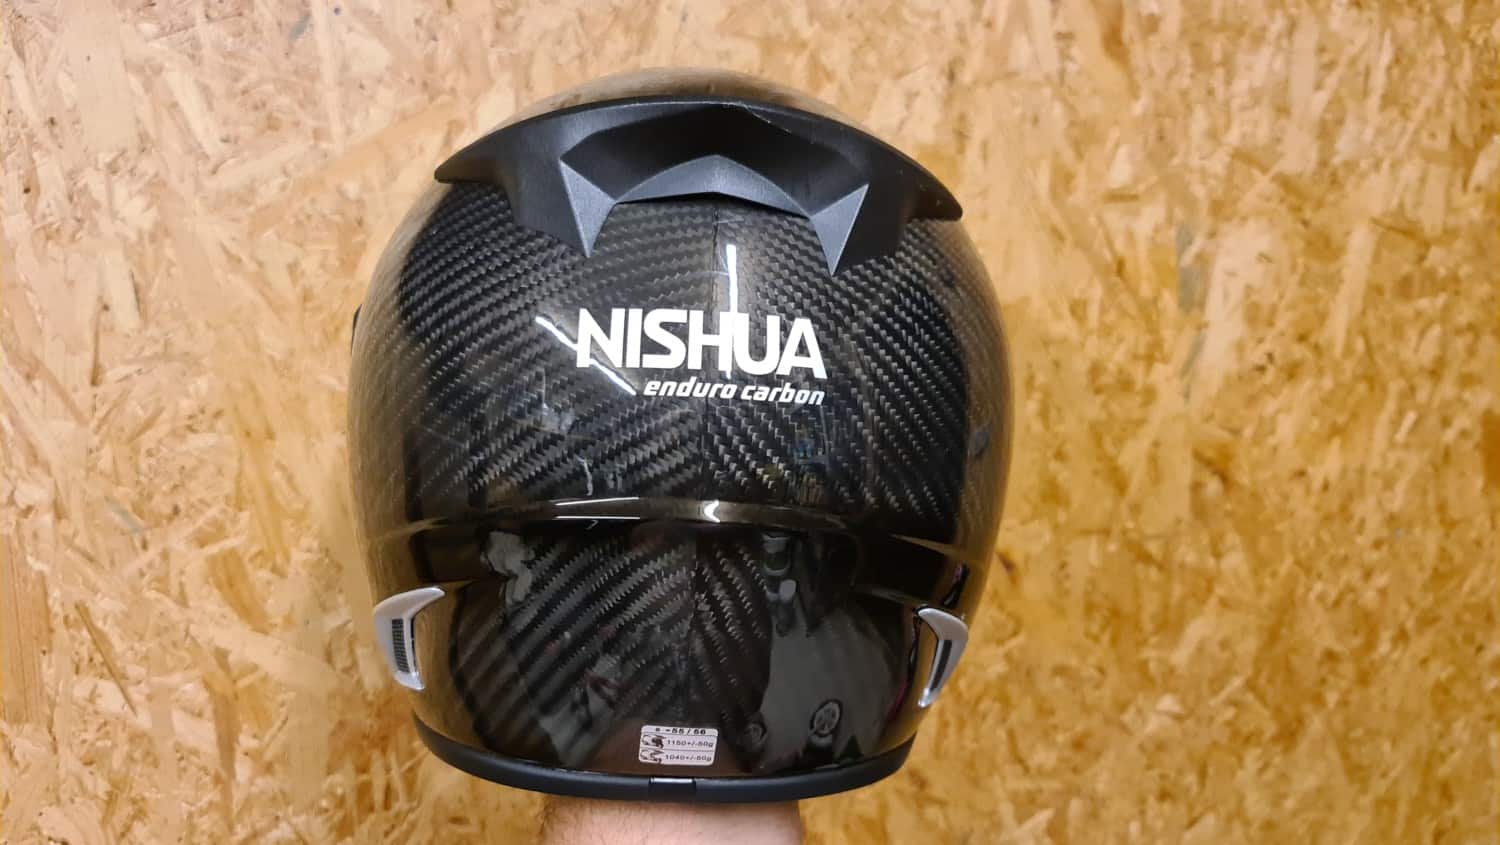 Test: Nishua Enduro Carbon